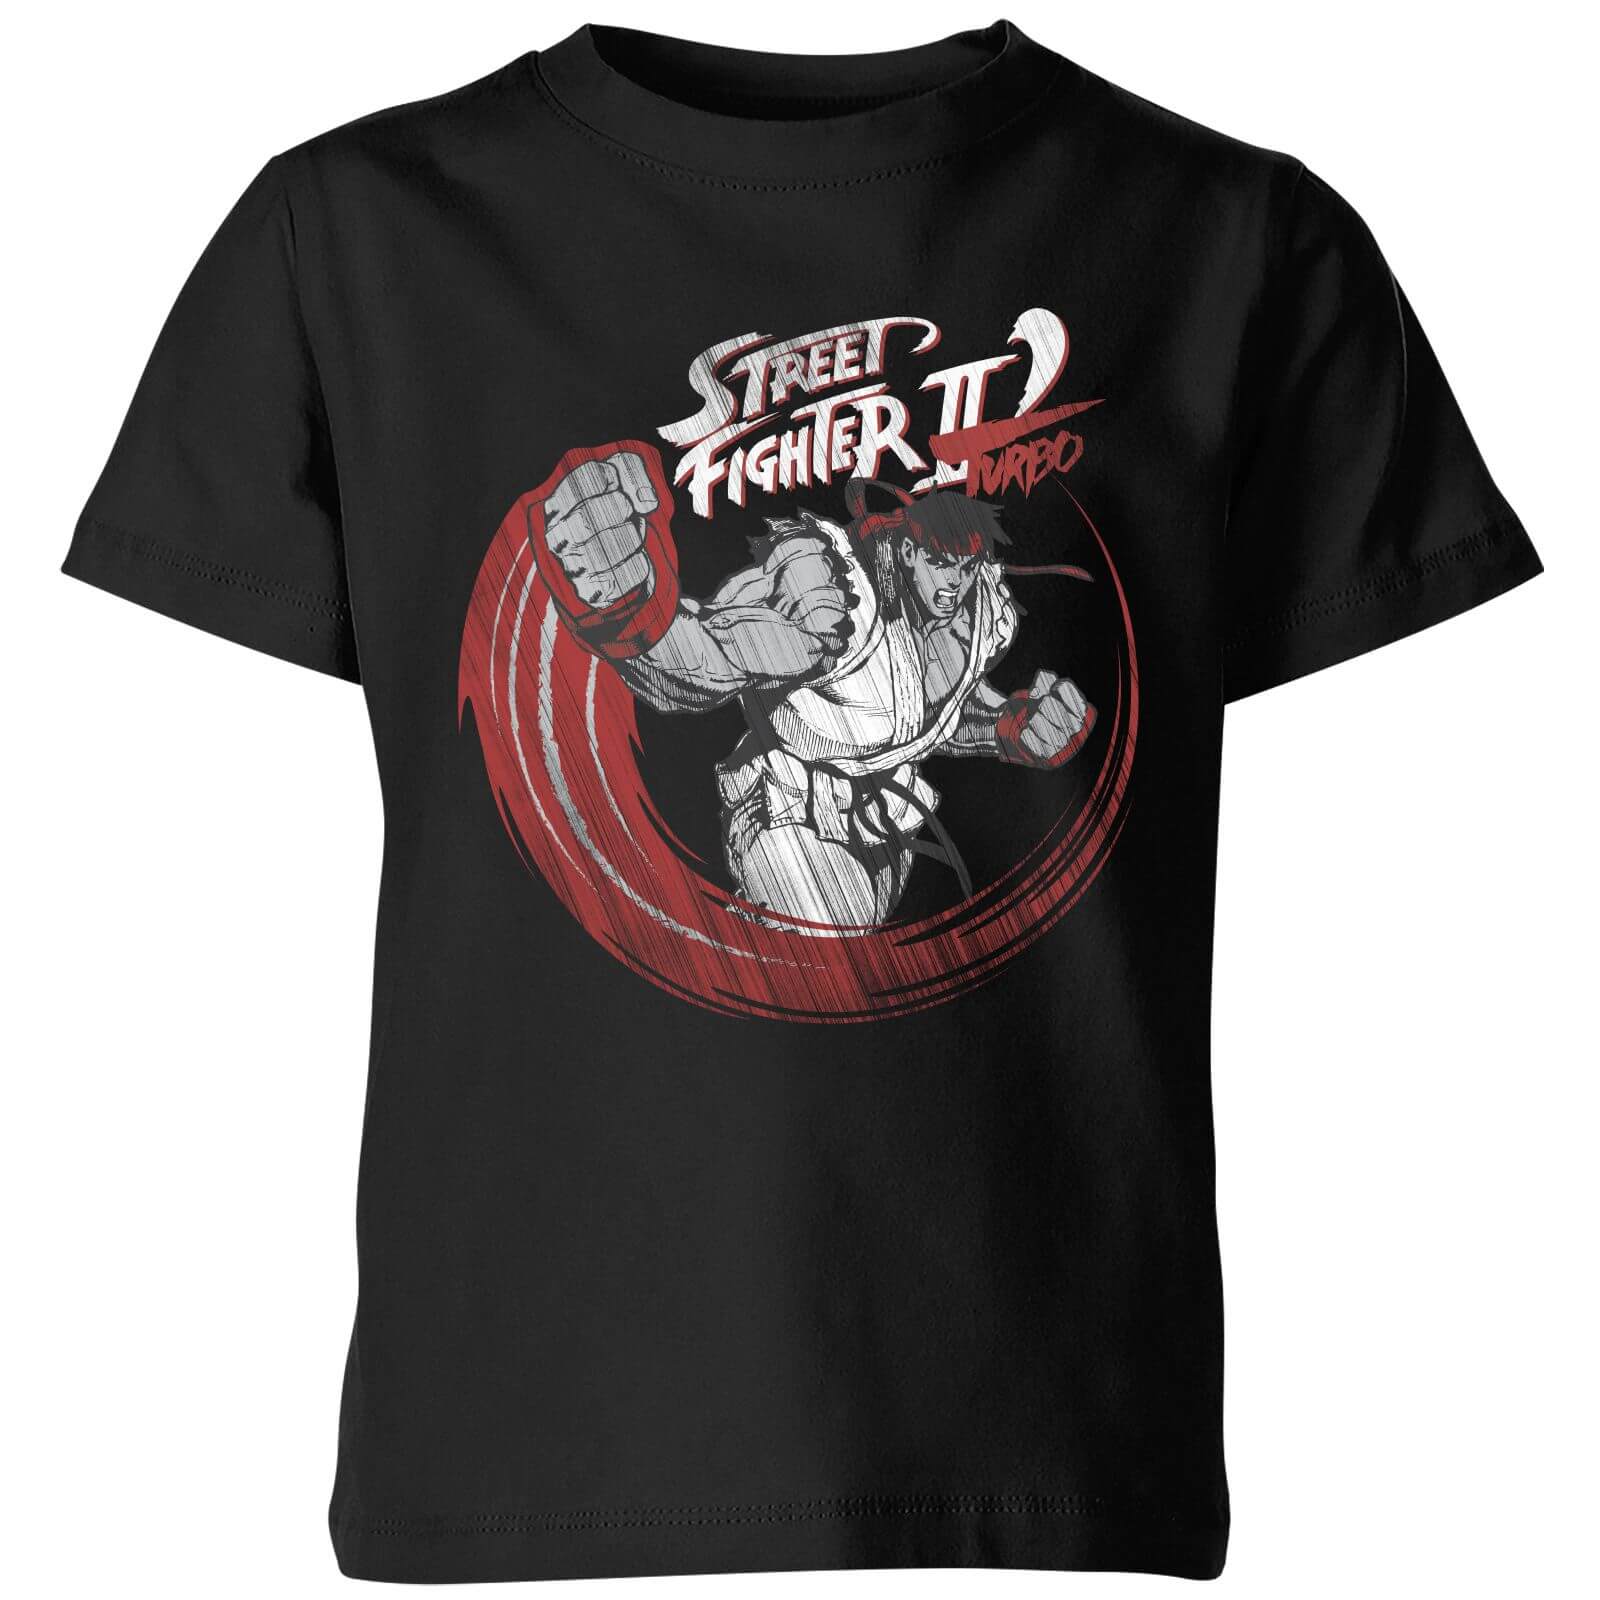 Street Fighter RYU Sketch Kids' T-Shirt - Black - 3-4 Years